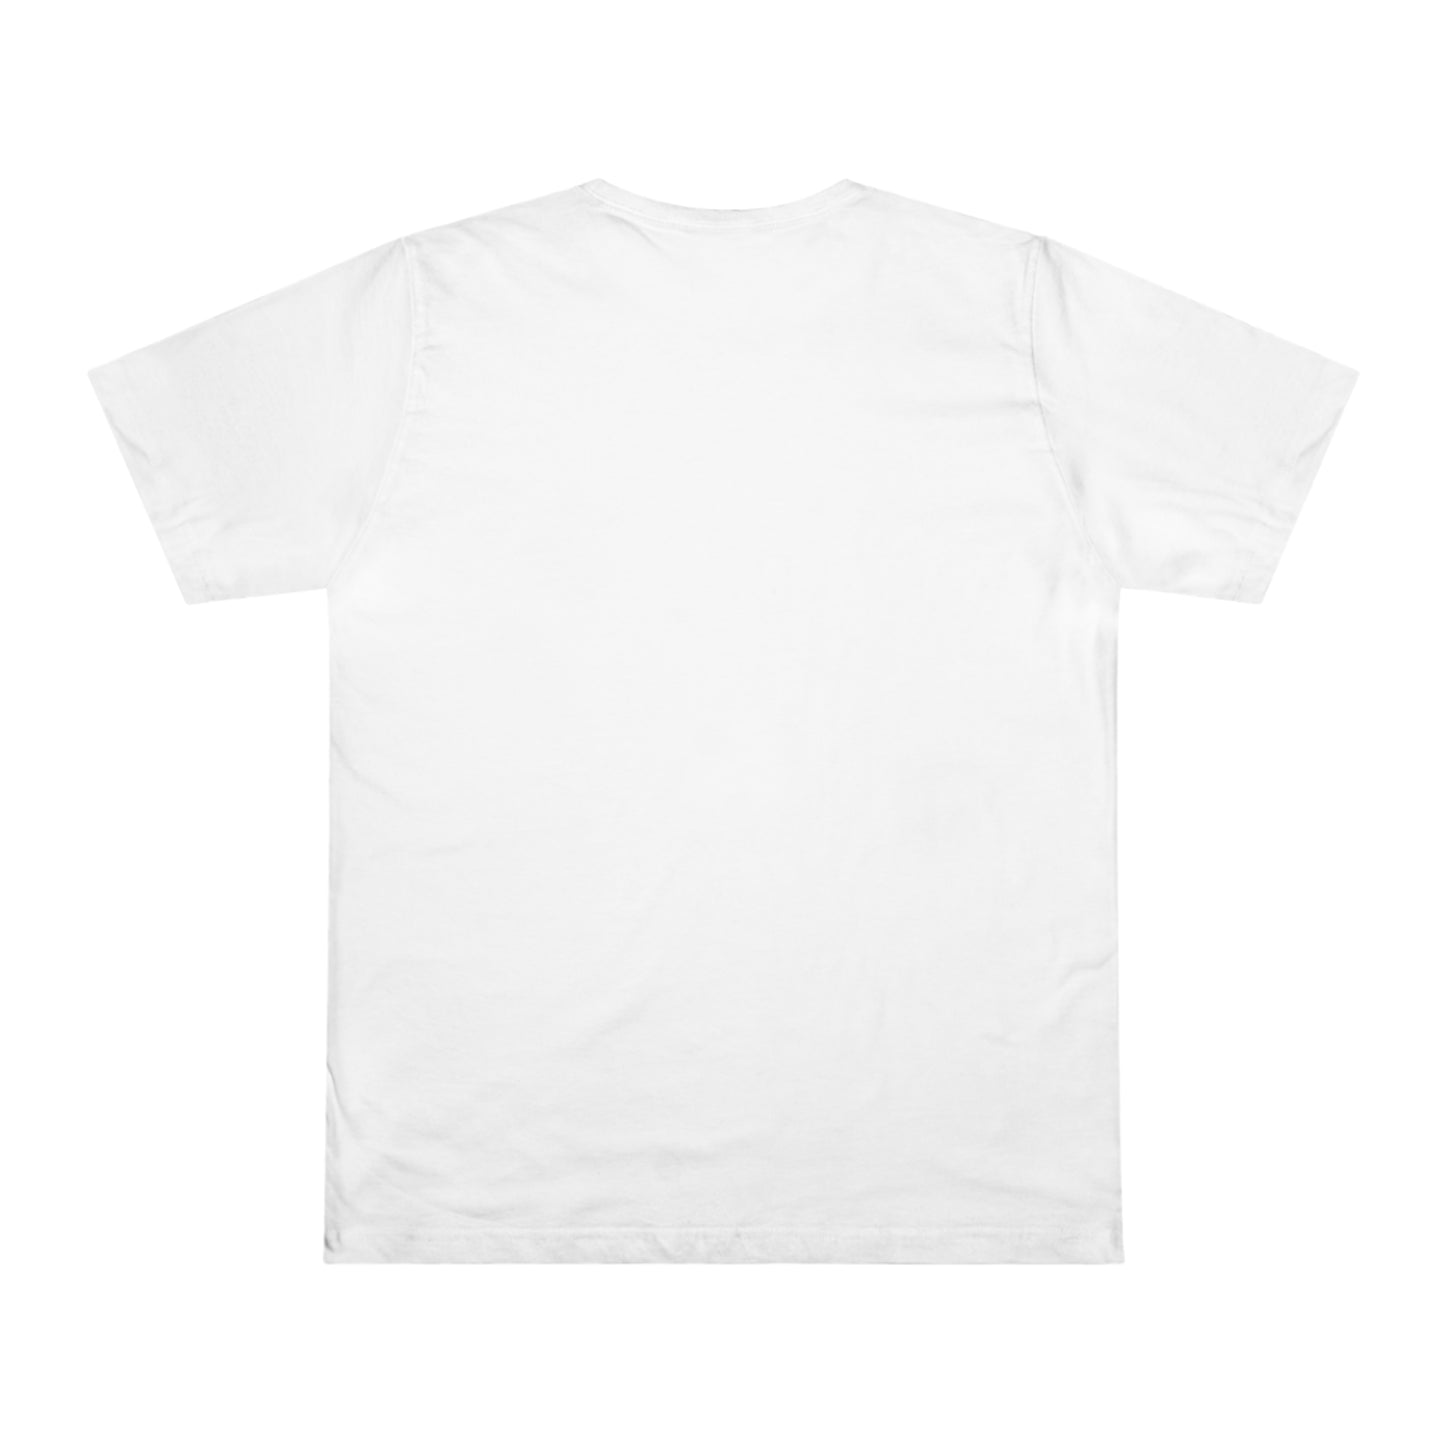 Hemp Unisex Deluxe T-shirt